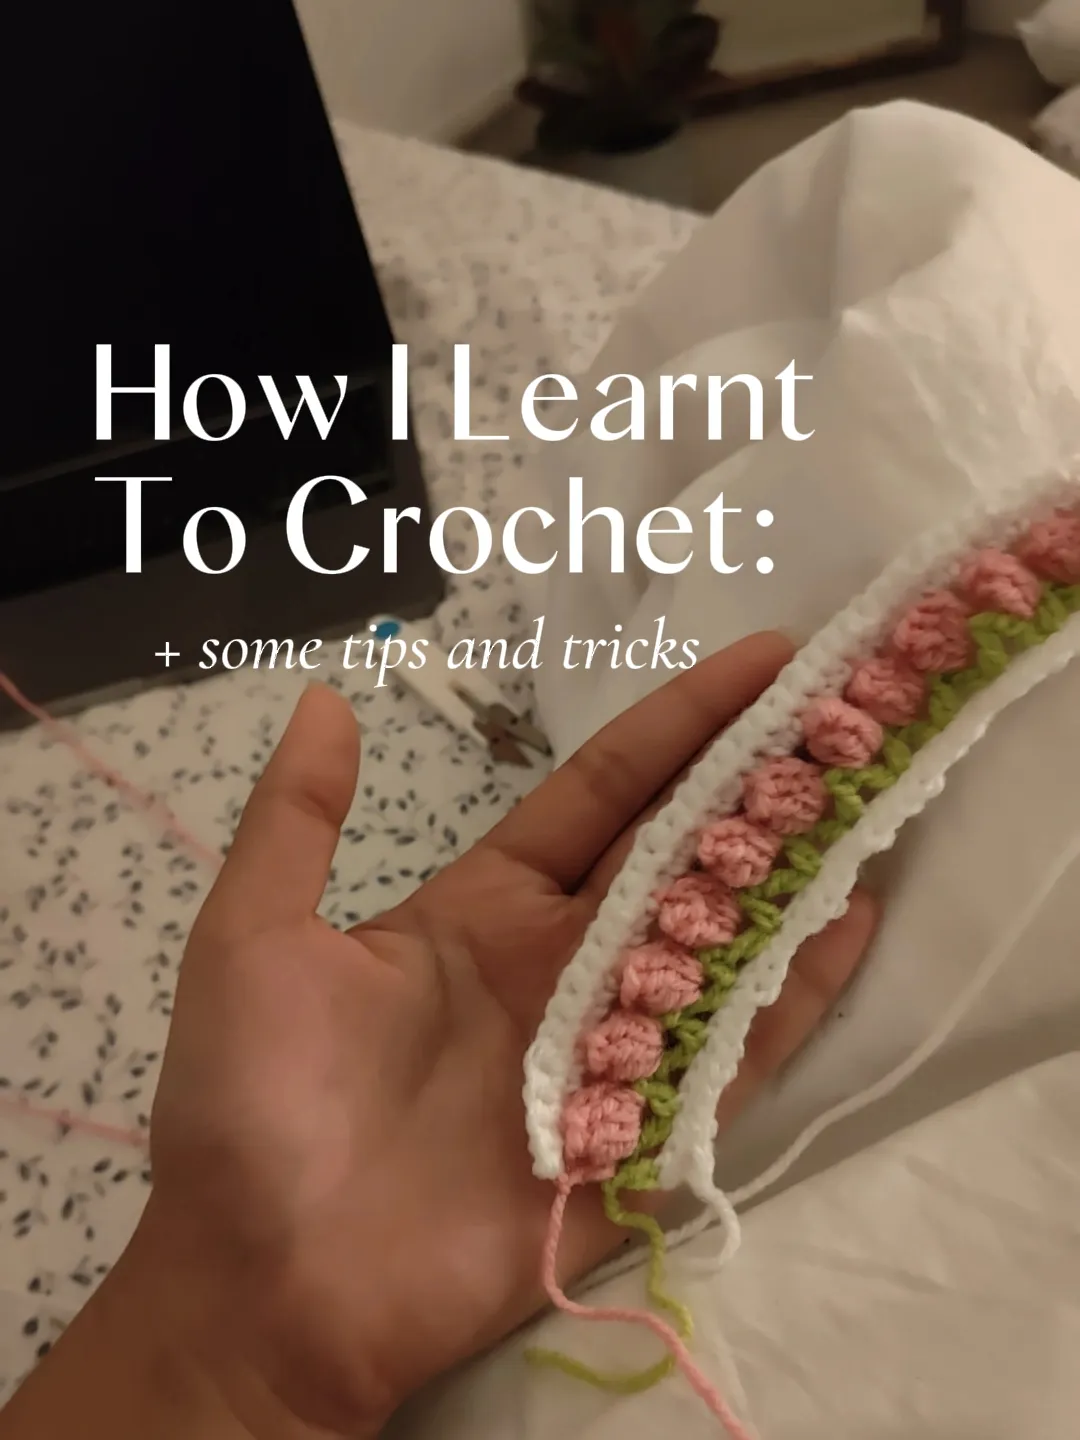 How to Crocheat - Lemon8 Search